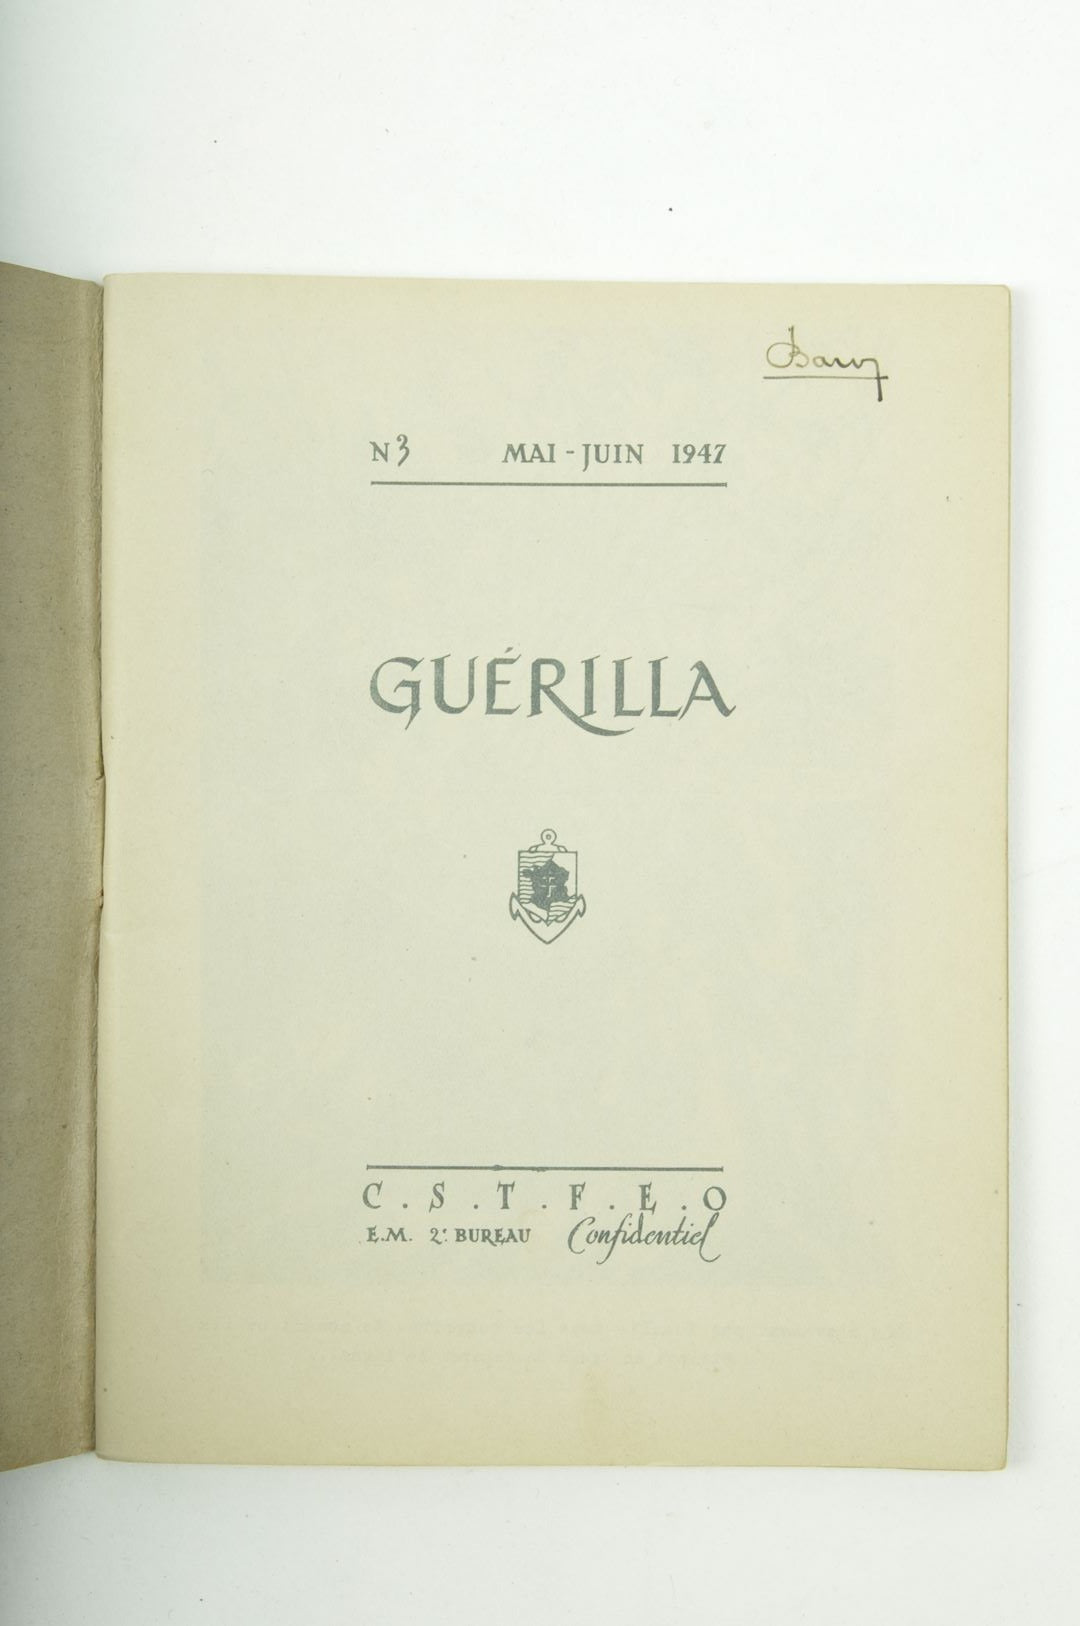 Manuel "Guérilla" N° 3 / Mai - Juin 1947